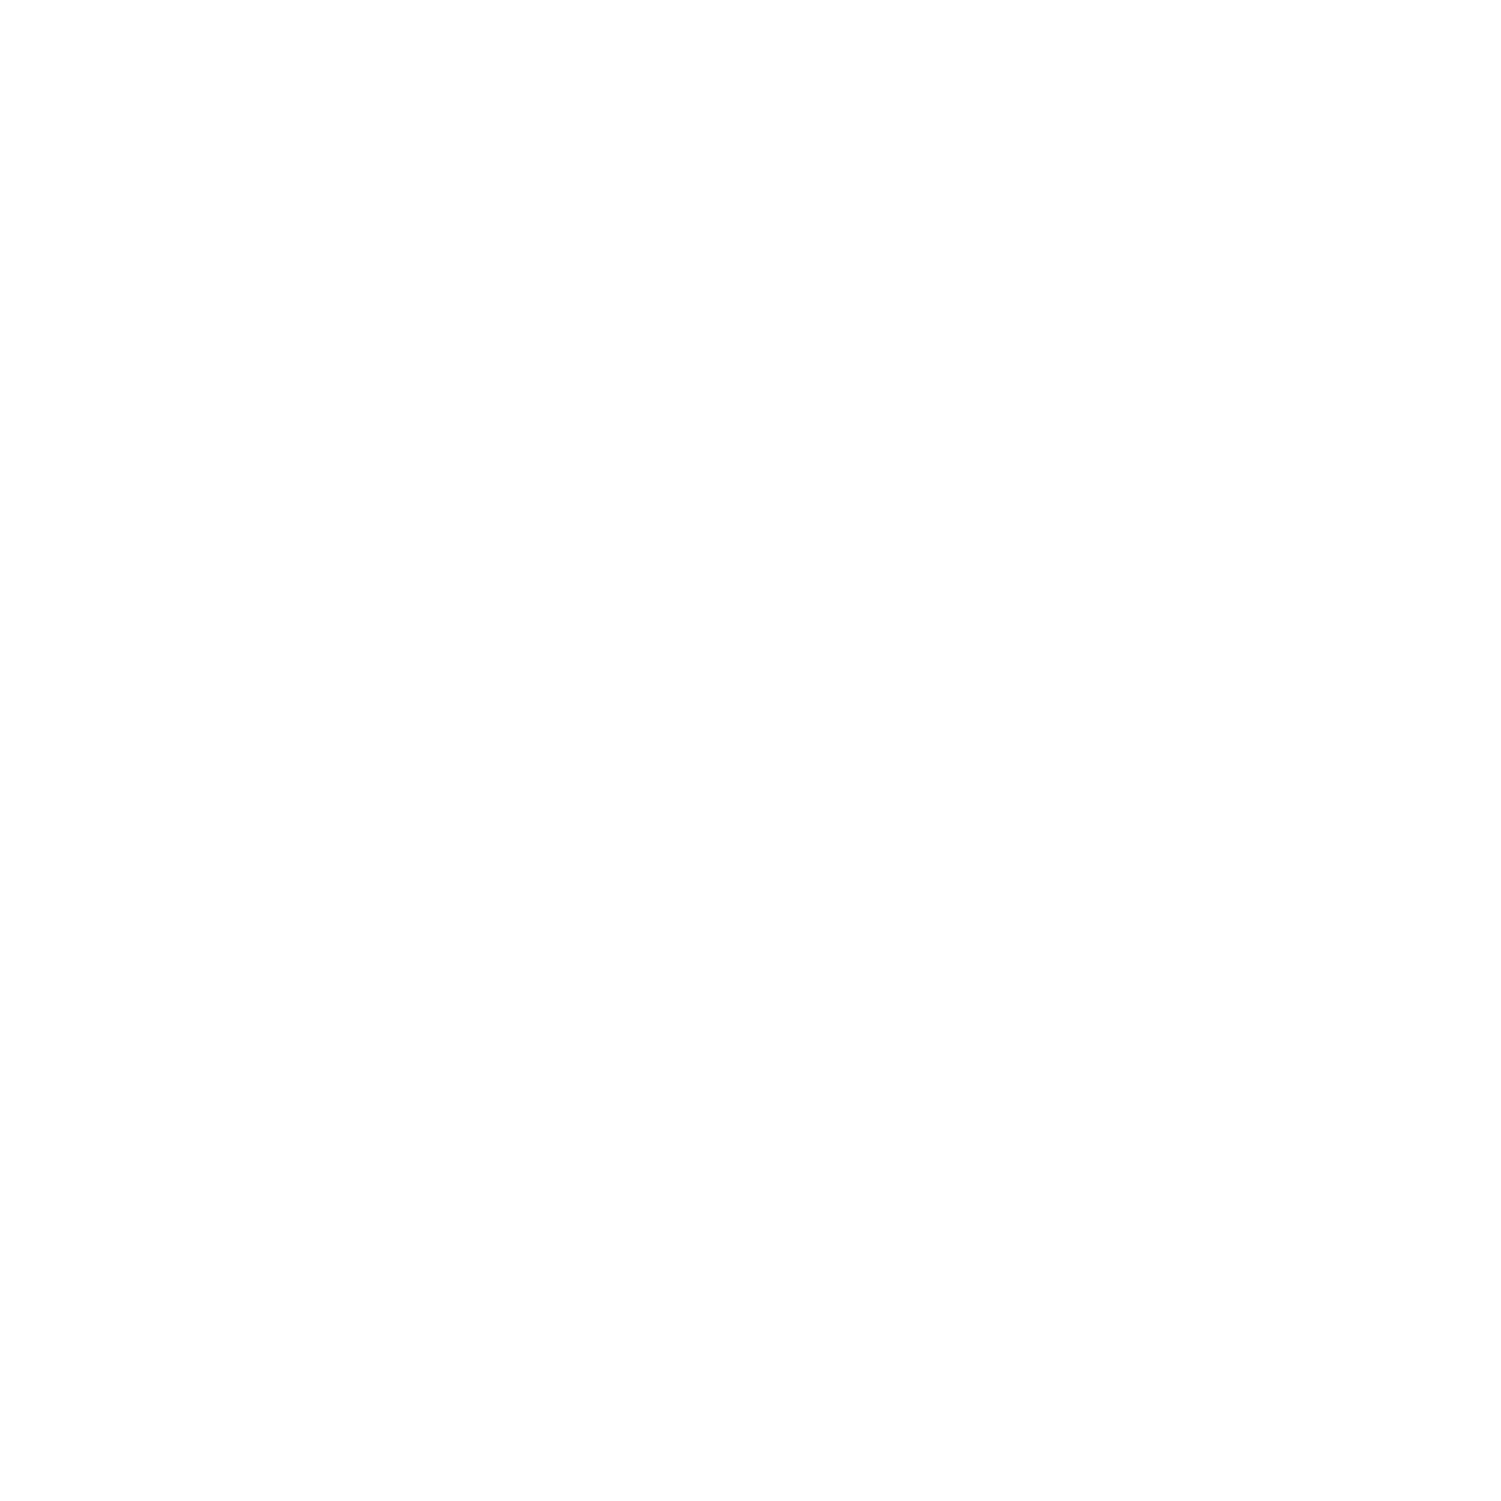 Longhorn hero logo